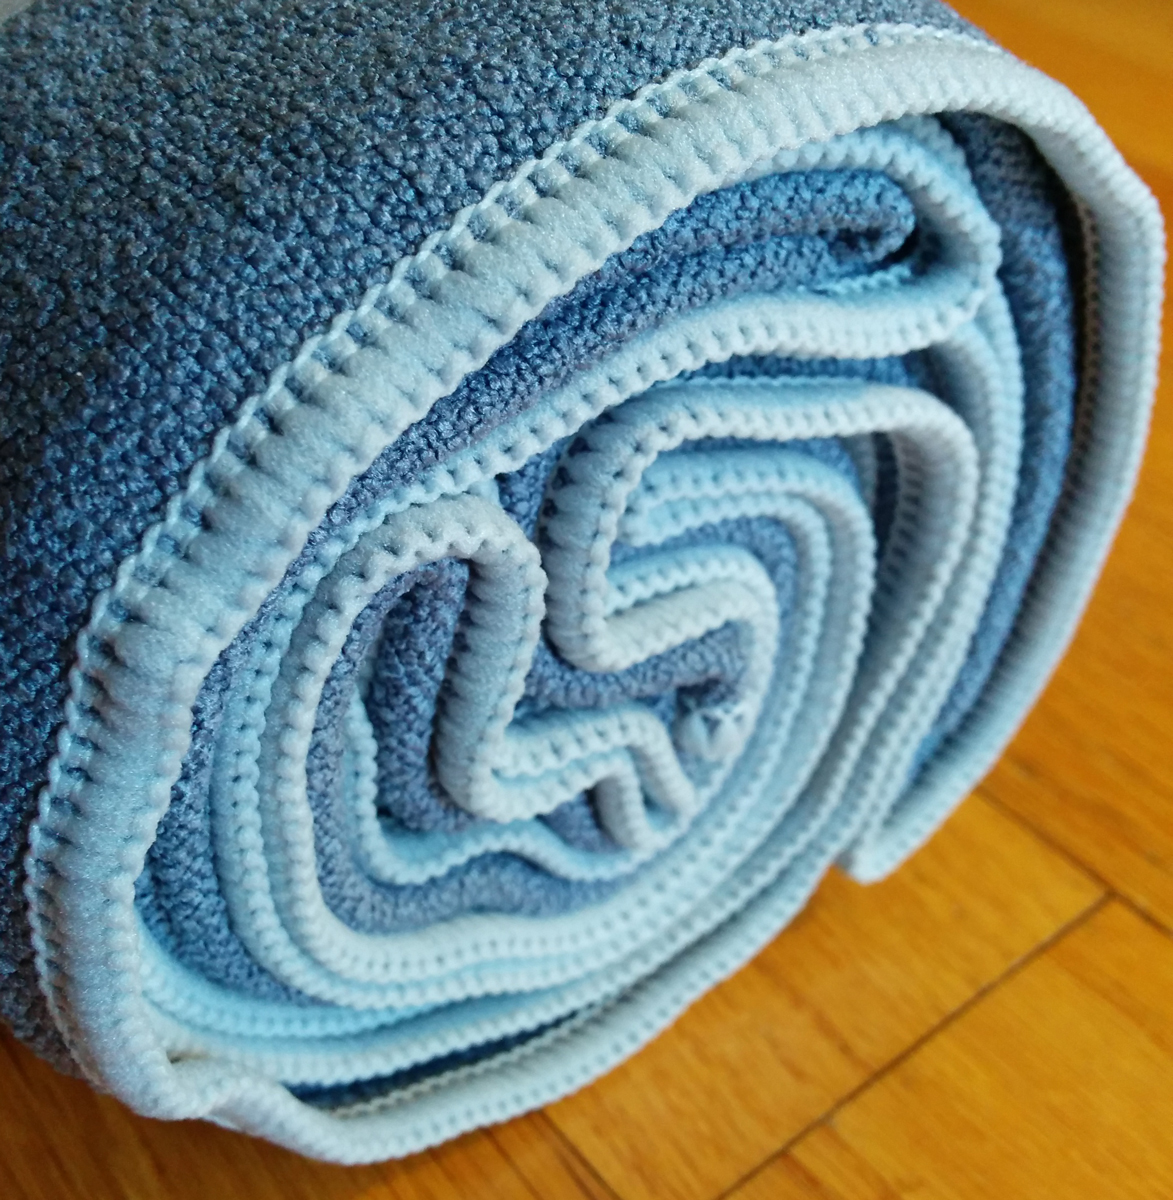 YogaRat Yoga Hand Towel 15x24